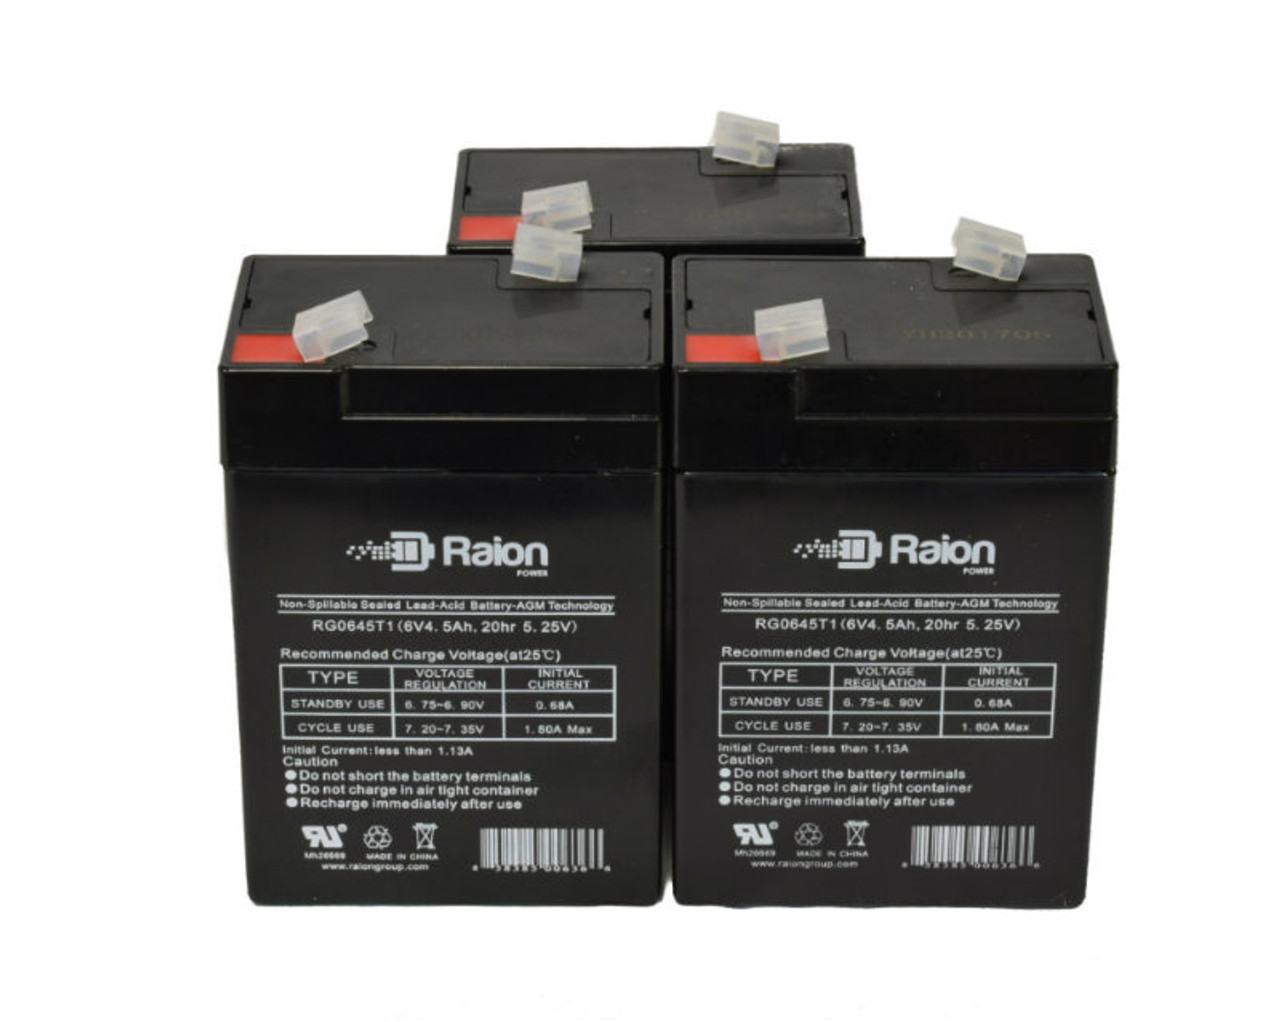 Raion Power 6V 4.5Ah Replacement Emergency Light Battery for Sonnenschein 103101 - 3 Pack